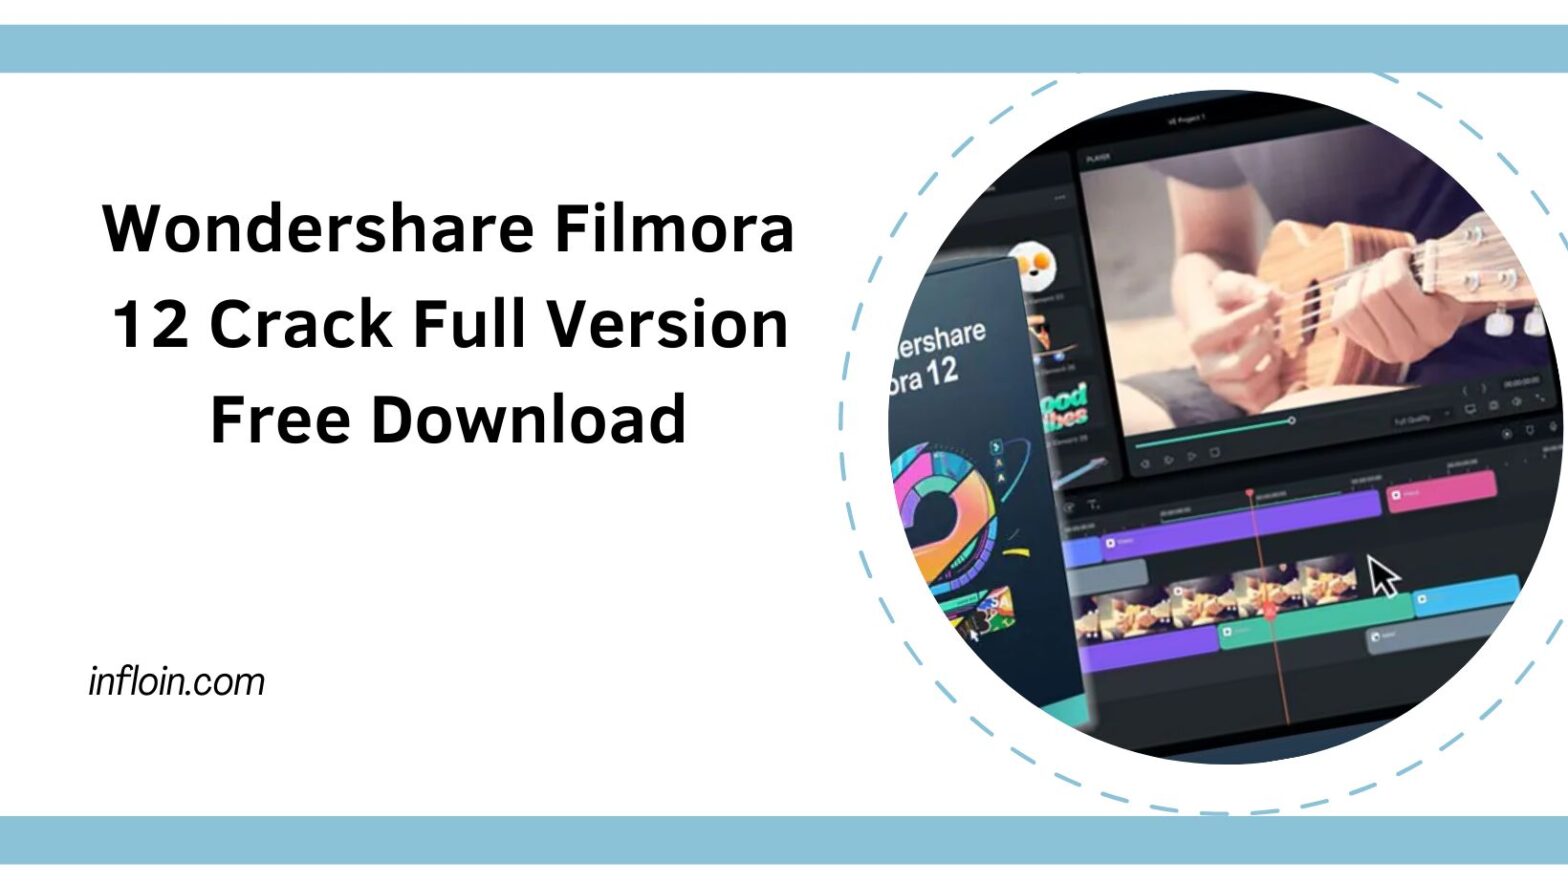 Wondershare Filmora 12 Crack Full Version Free Download